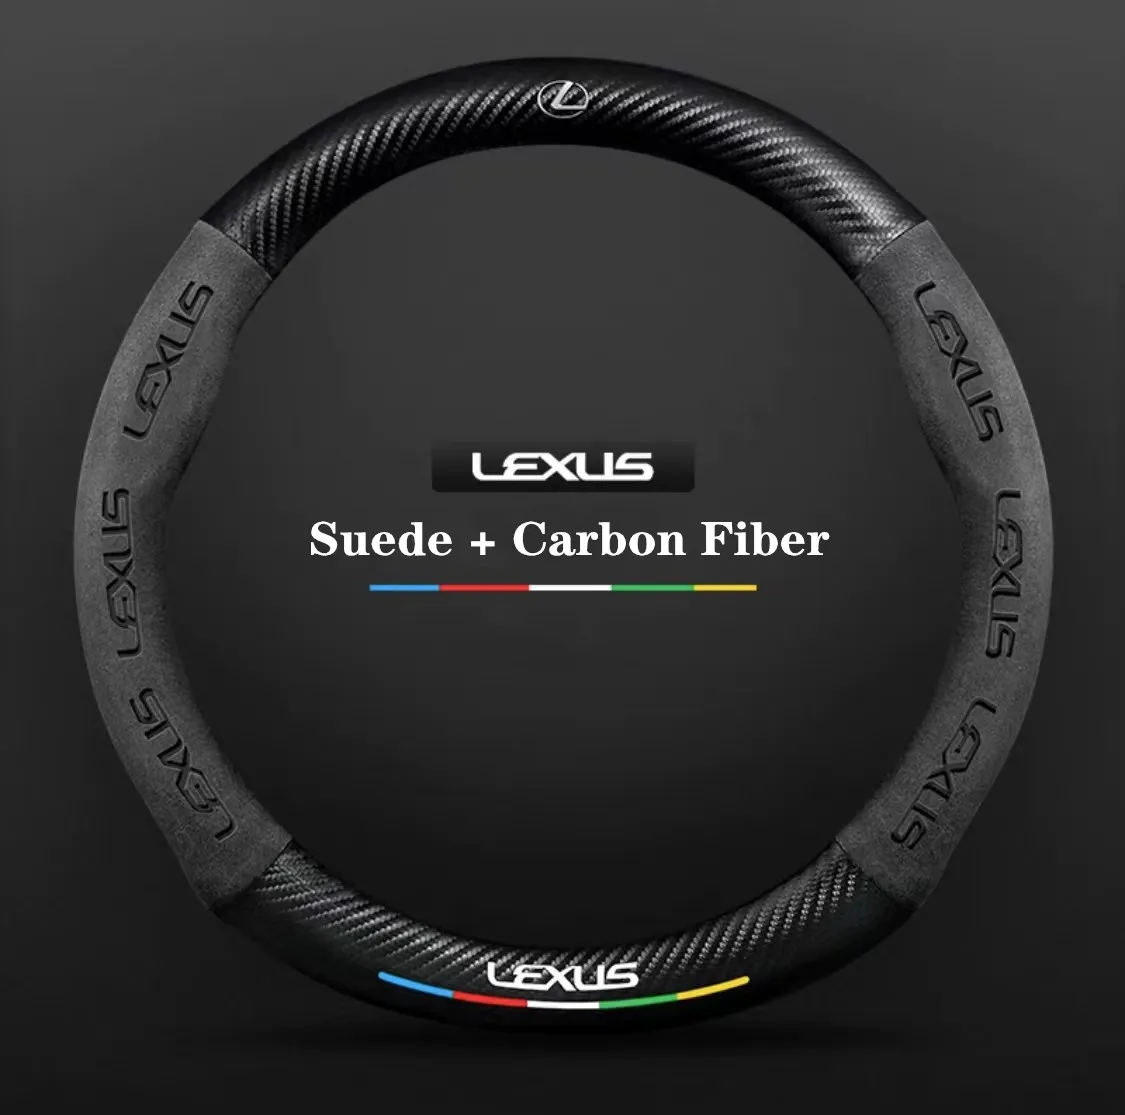 

Car Suede carbon fiber Non-slip steering wheel cover For Lexus RX300 RX350 IS250 LX570 IS200 IS300 LS400 CT200h IS200 ES200 NX